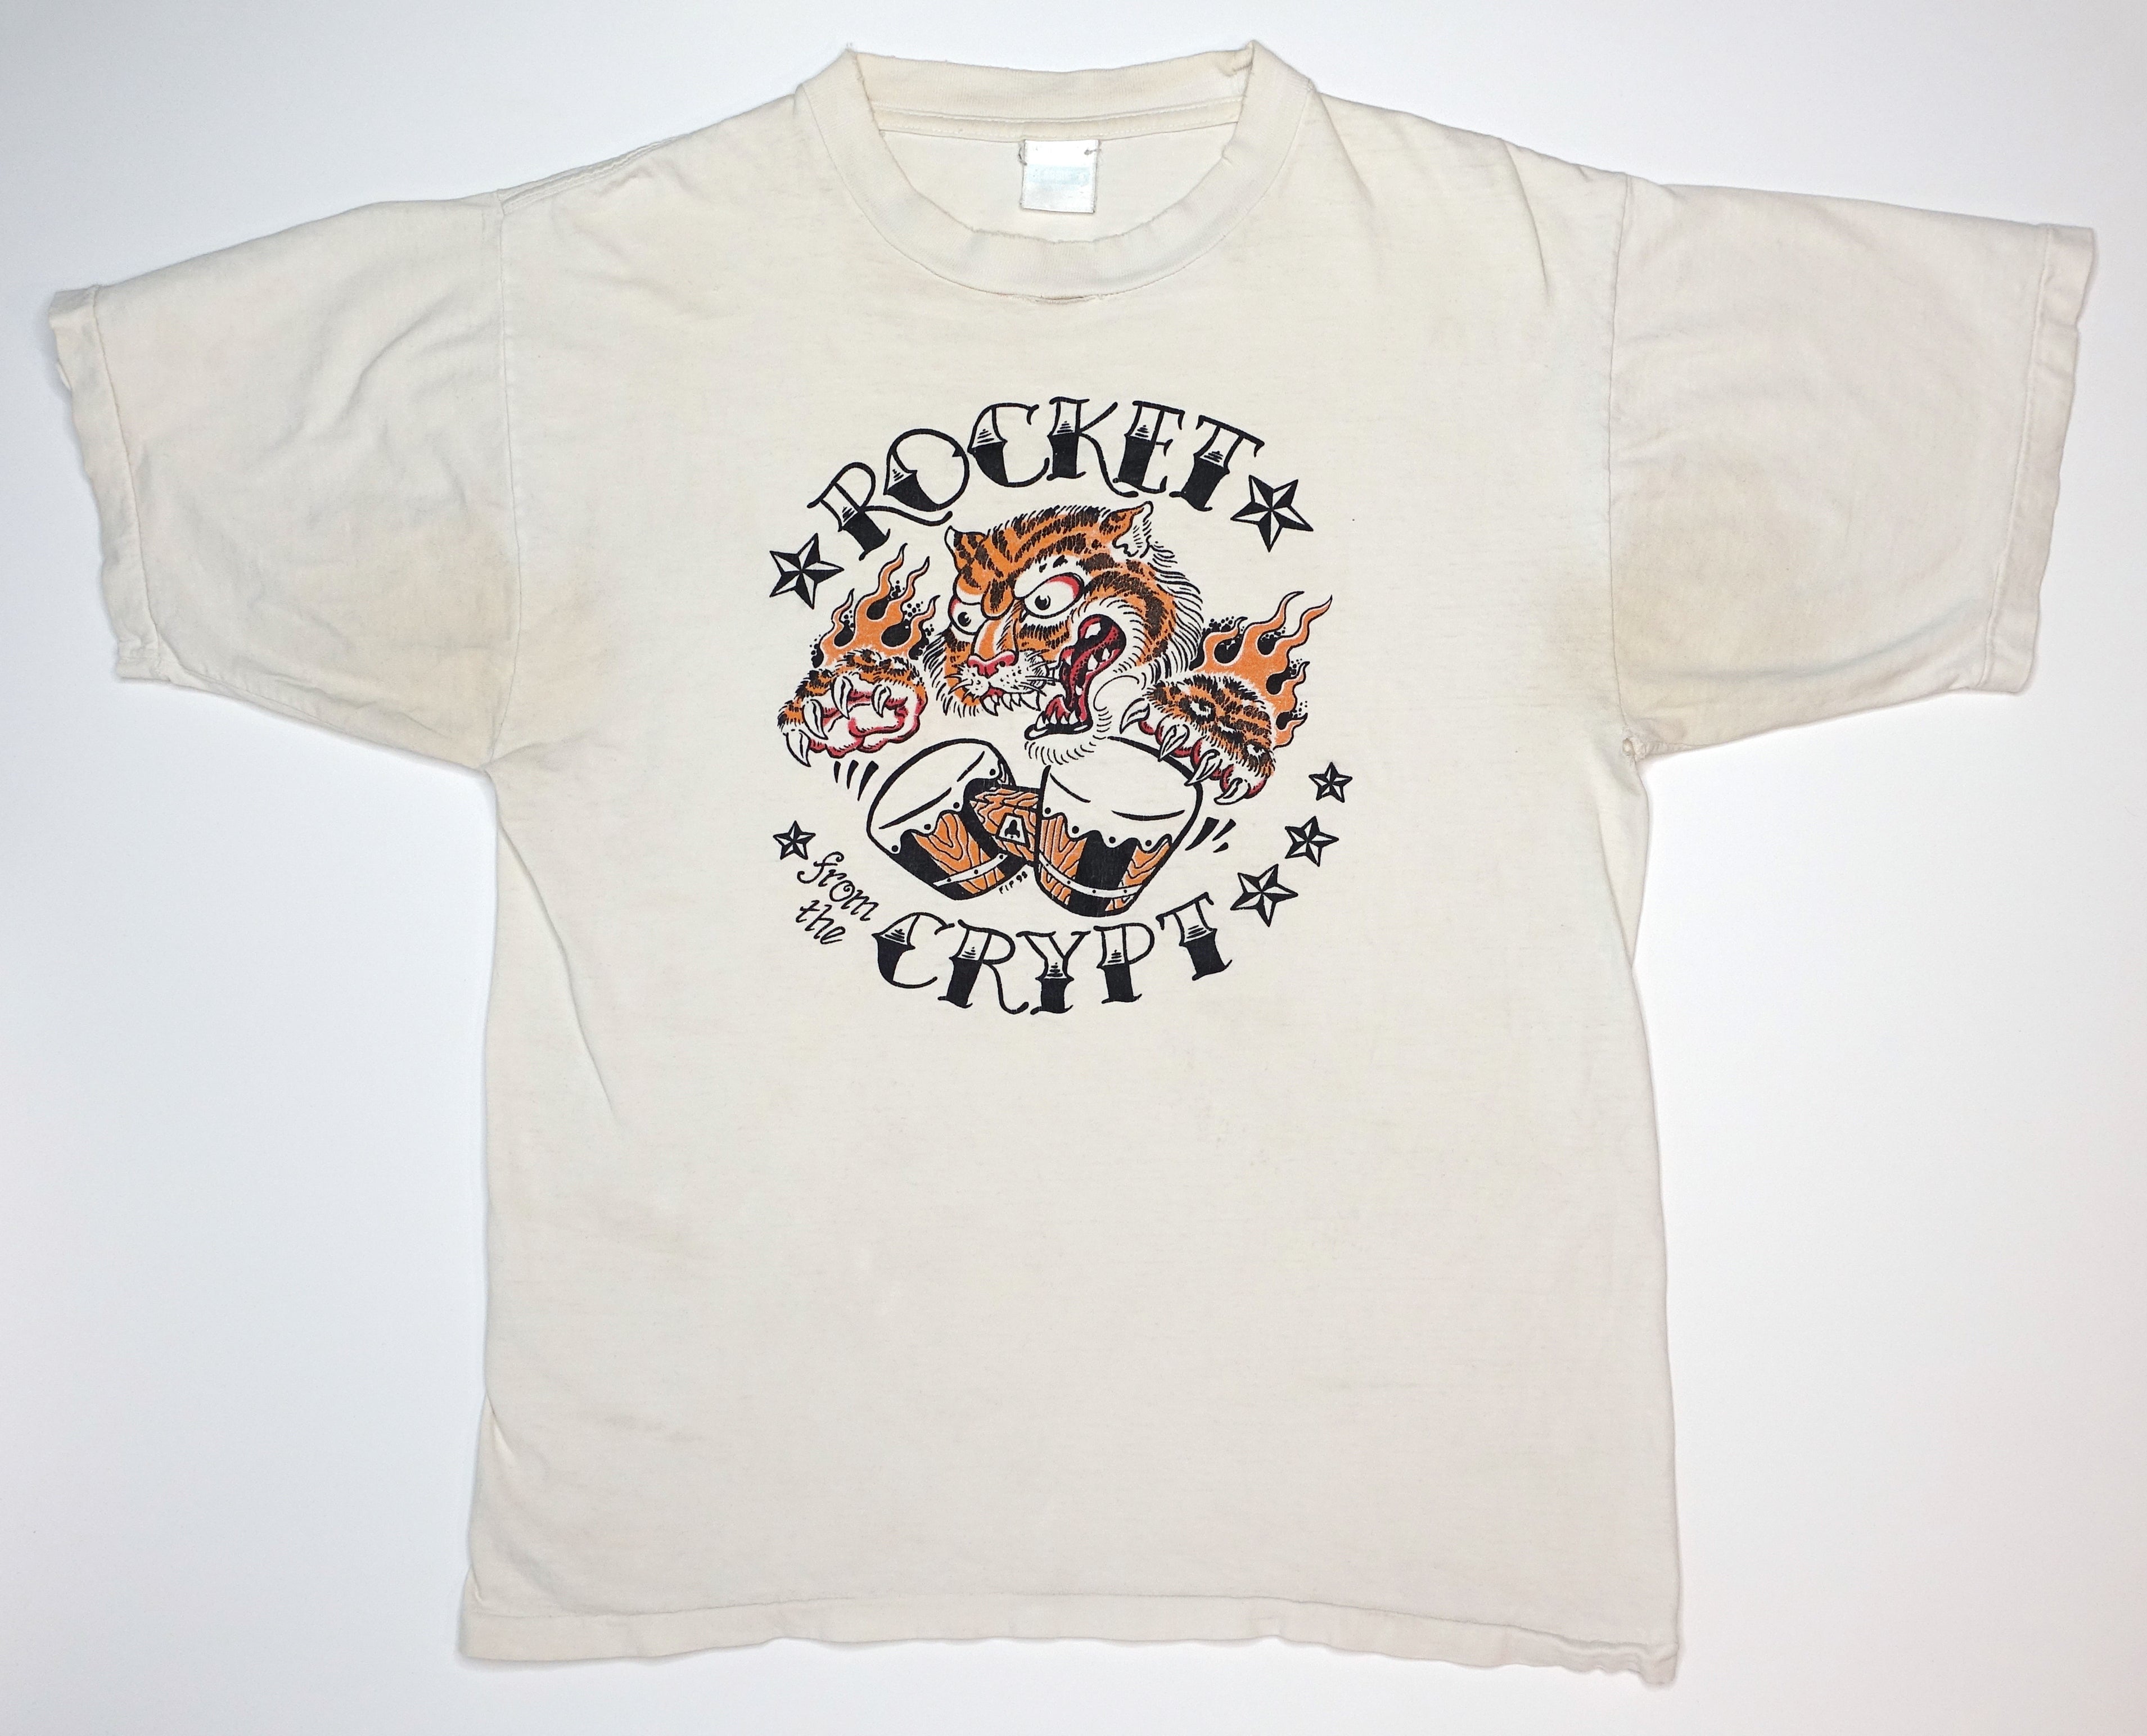 Rocket From the Crypt - Tiger W/ Bongos 1998 RFTC Tour Shirt Size XL